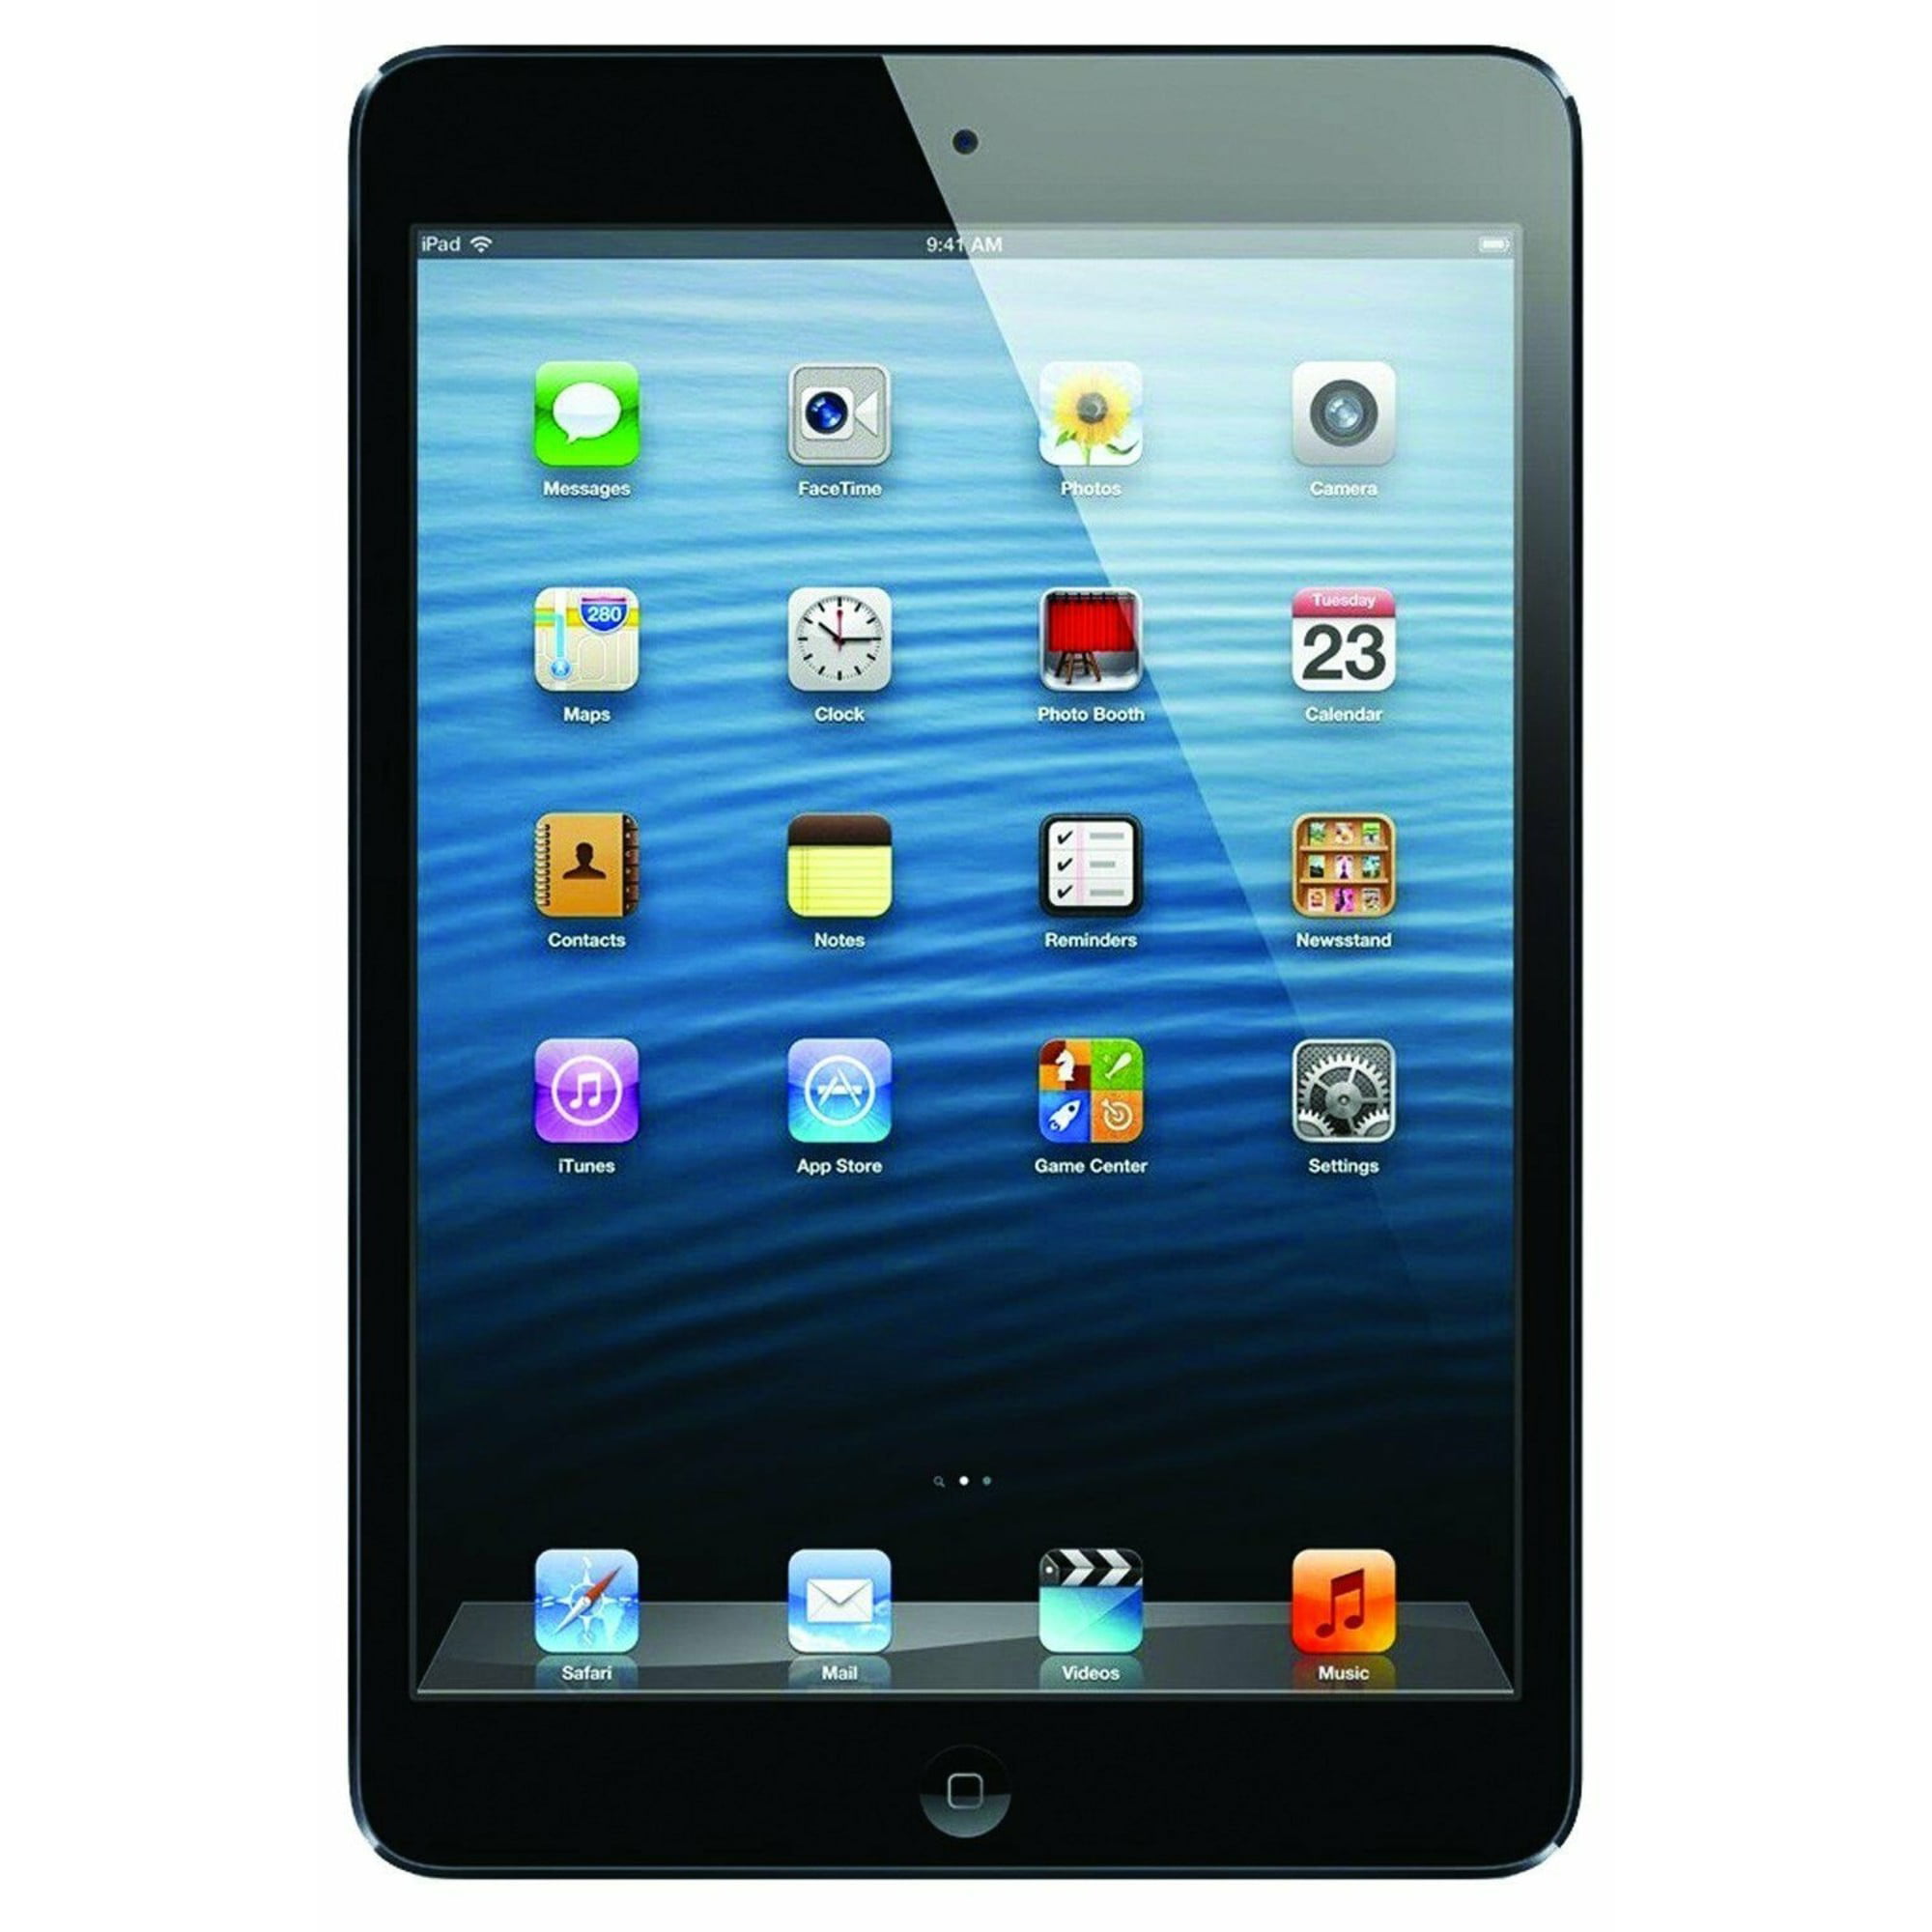 Apple iPad Mini 64GB WiFi Tablet w/ 5MP Camera - Gray (Refurbished